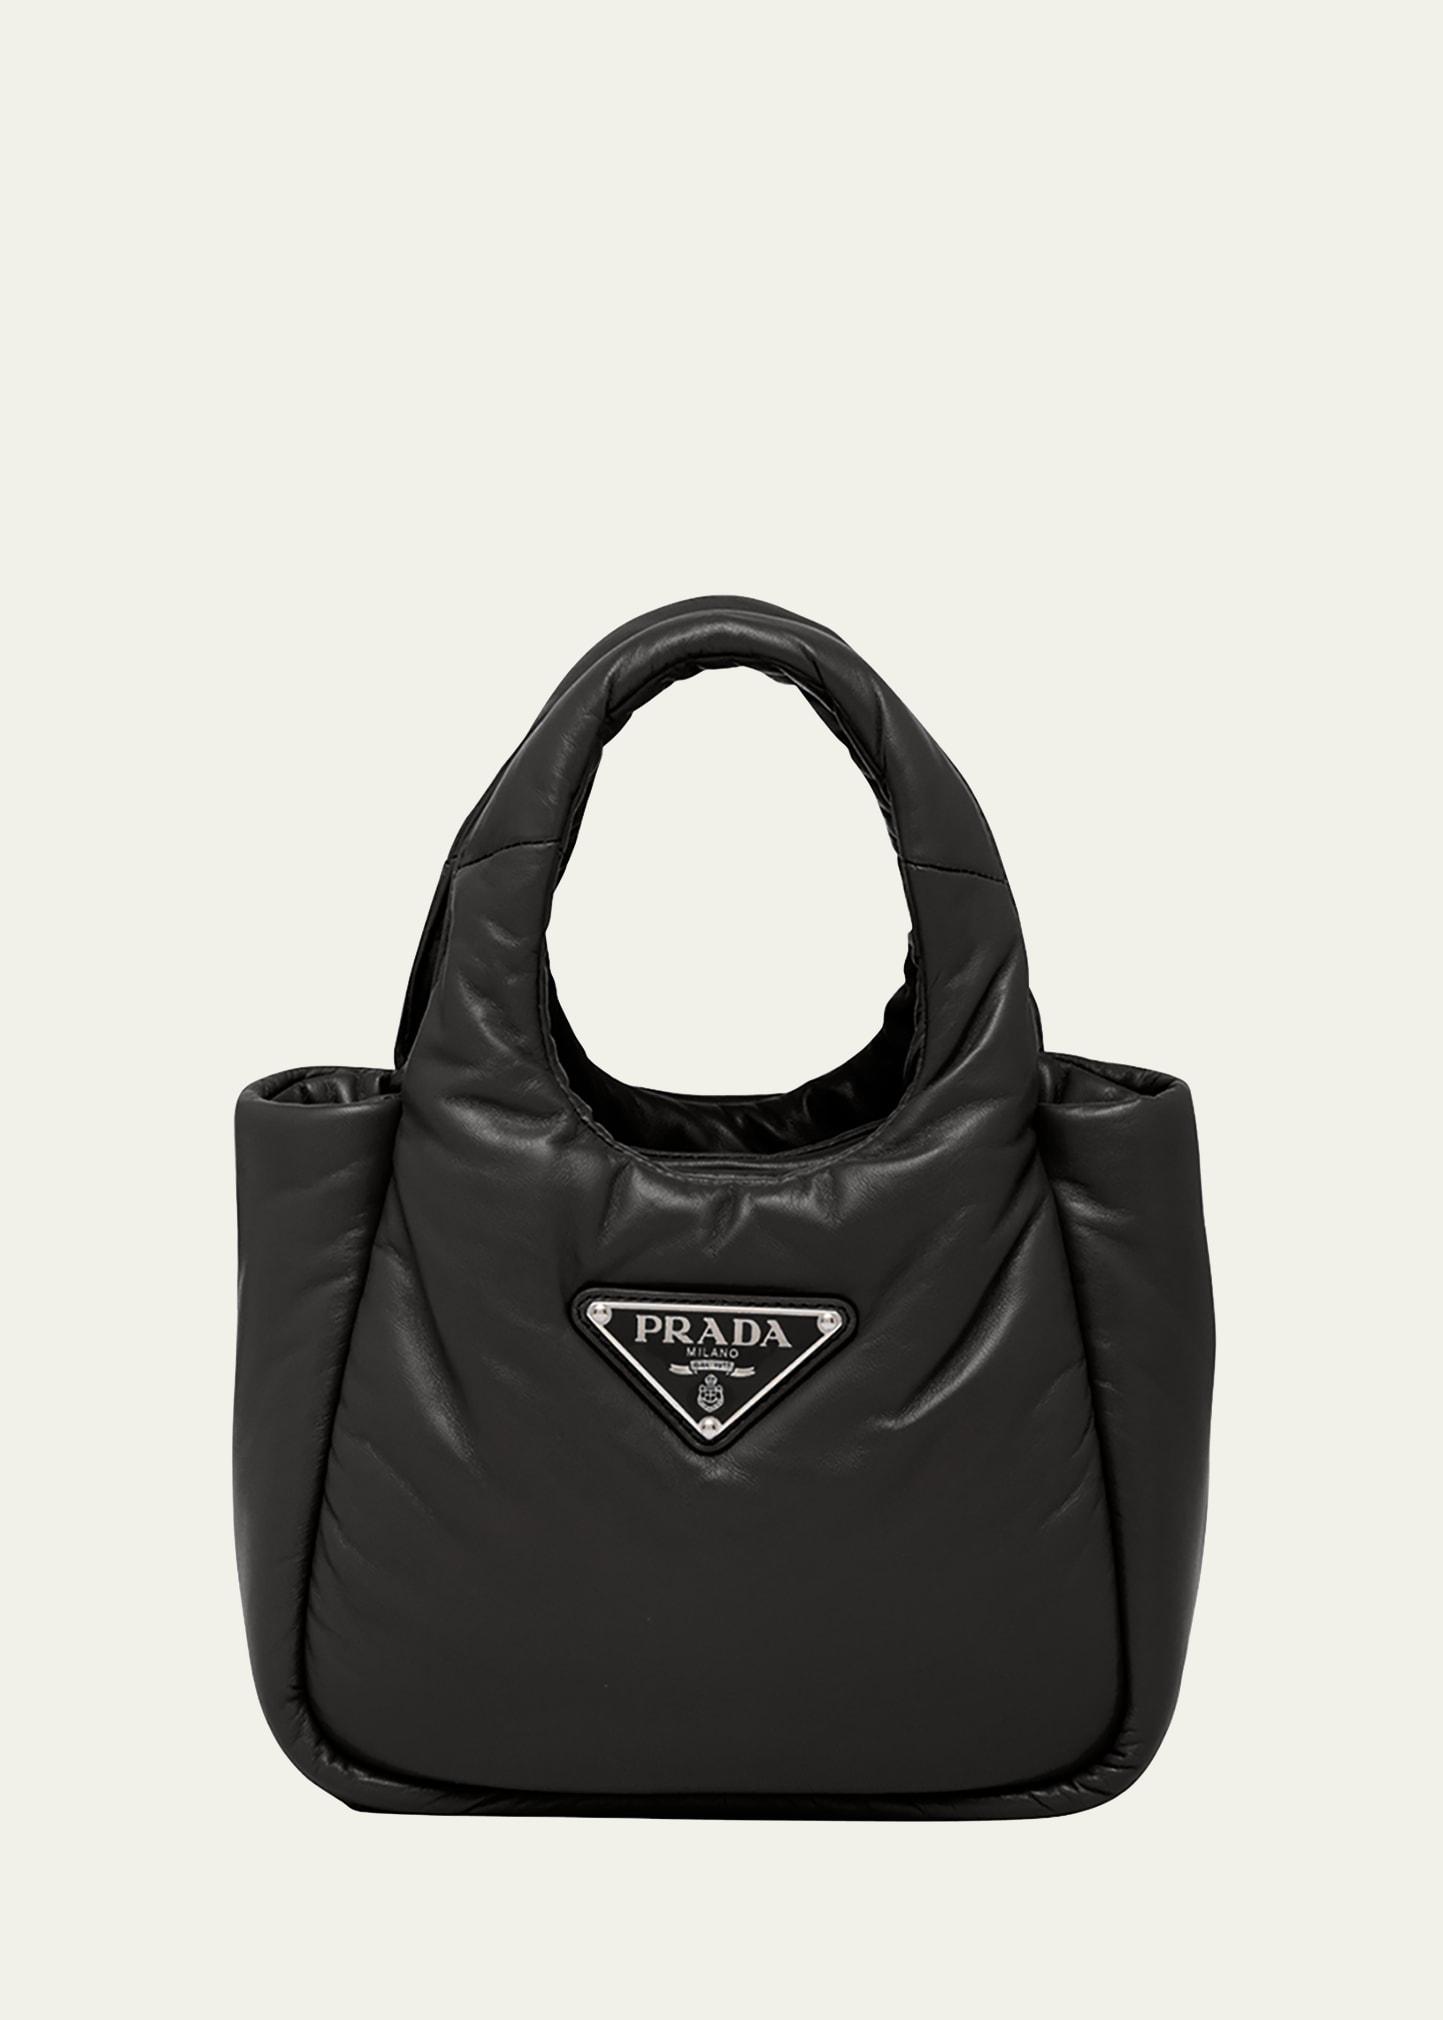 Prada Napa Leather Top-handle Bag in Black | Lyst